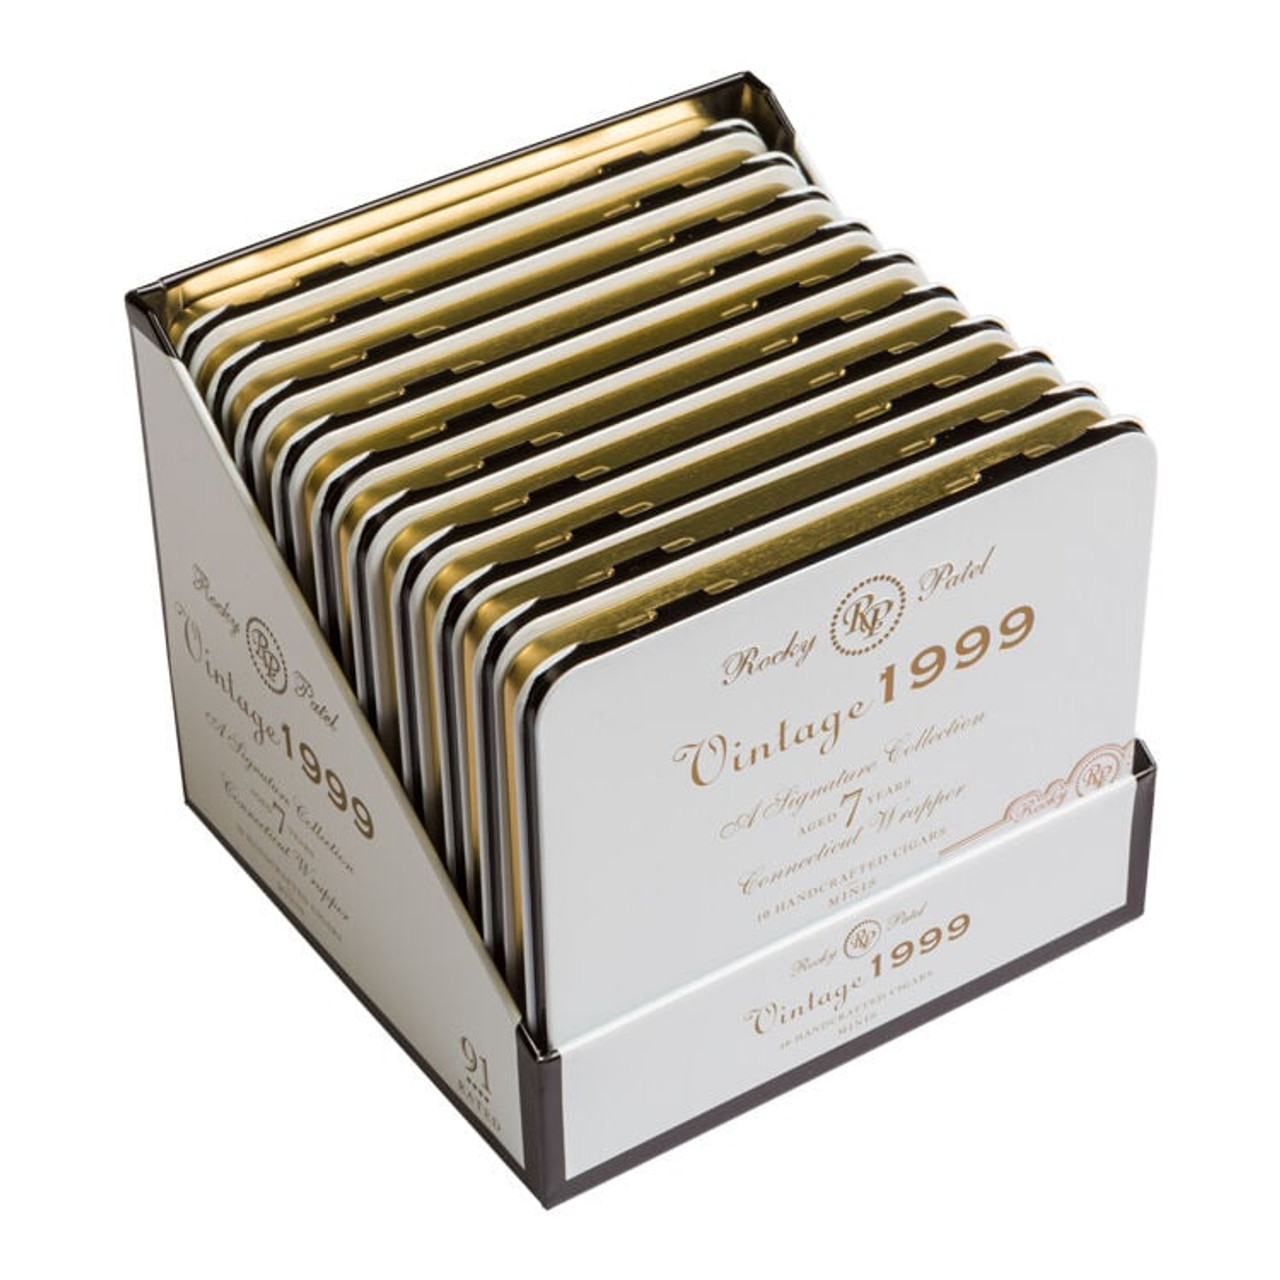 Rocky Patel Vintage 1999 Mini Cigars - 4.25 x 32 (10 Tins of 10 (100 Total)) *Box